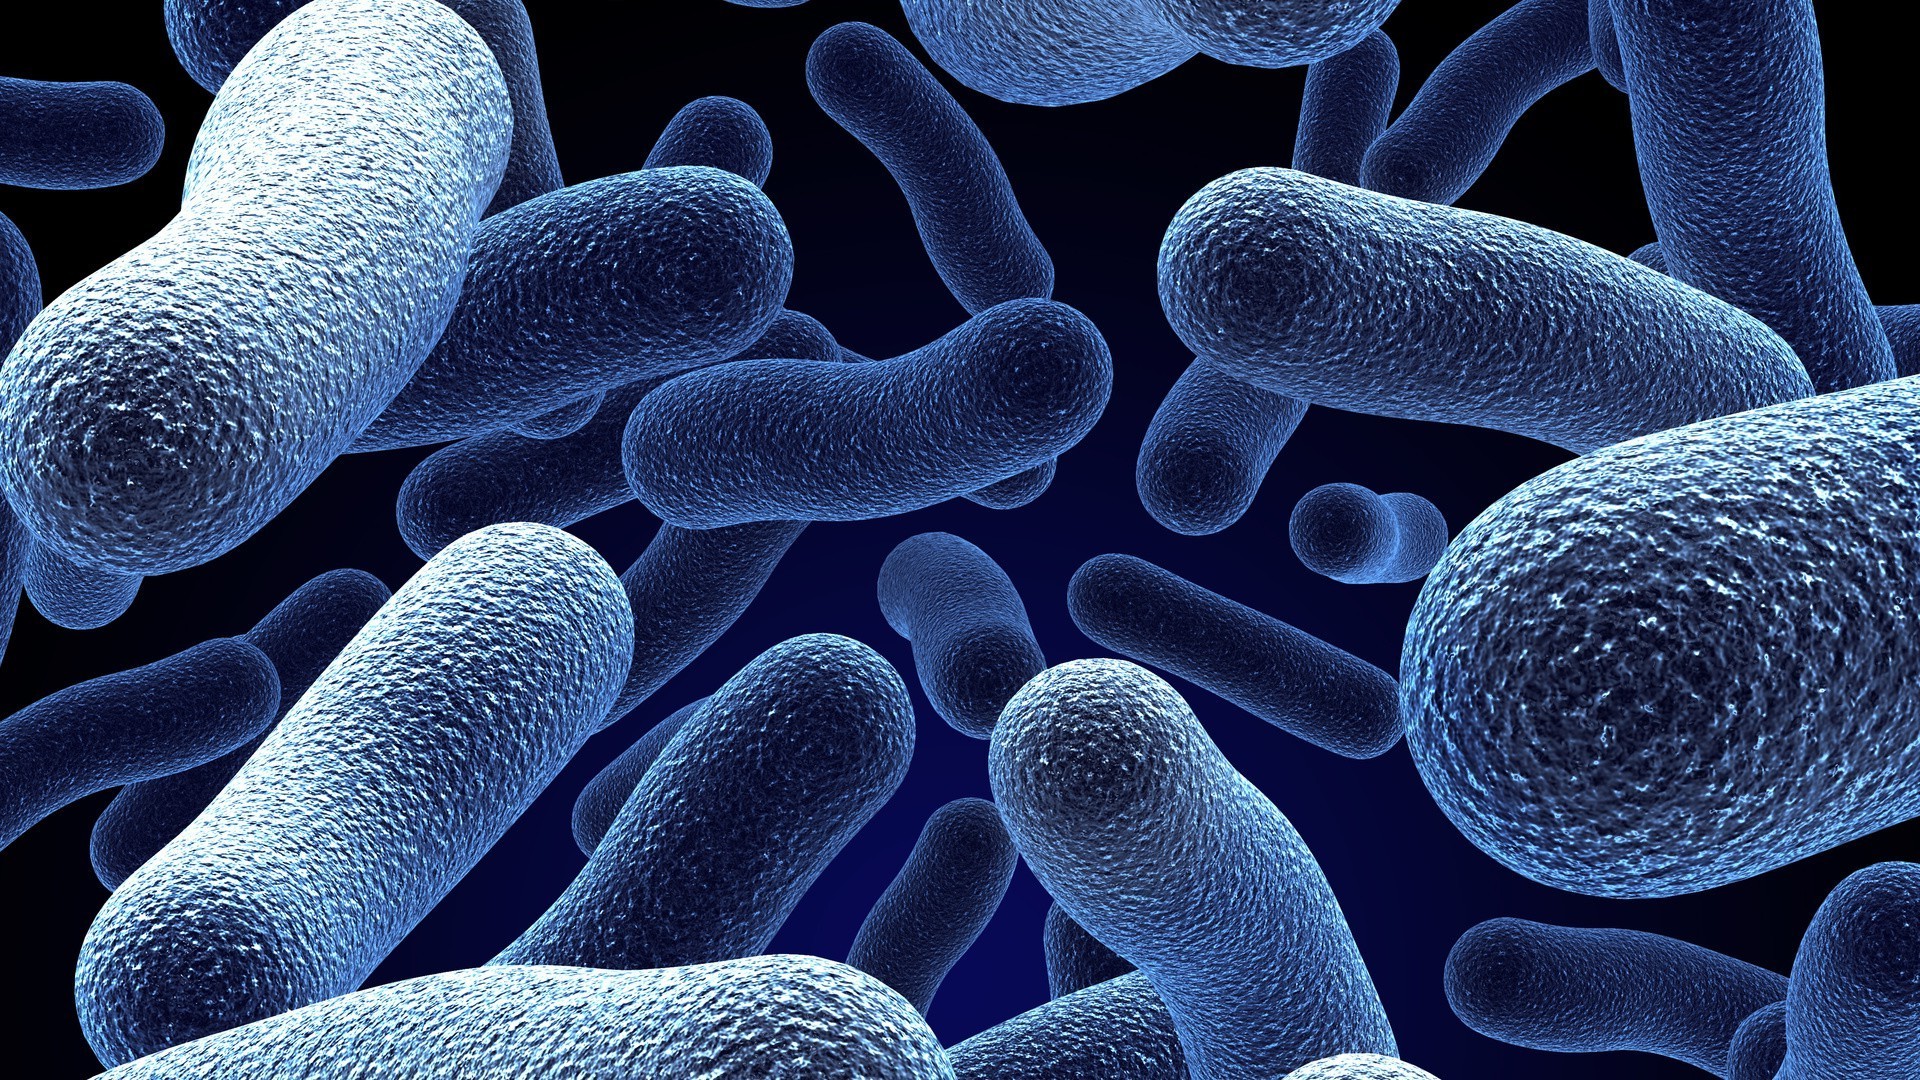 microbiology wallpaper,organism,blue,close up,pattern,finger